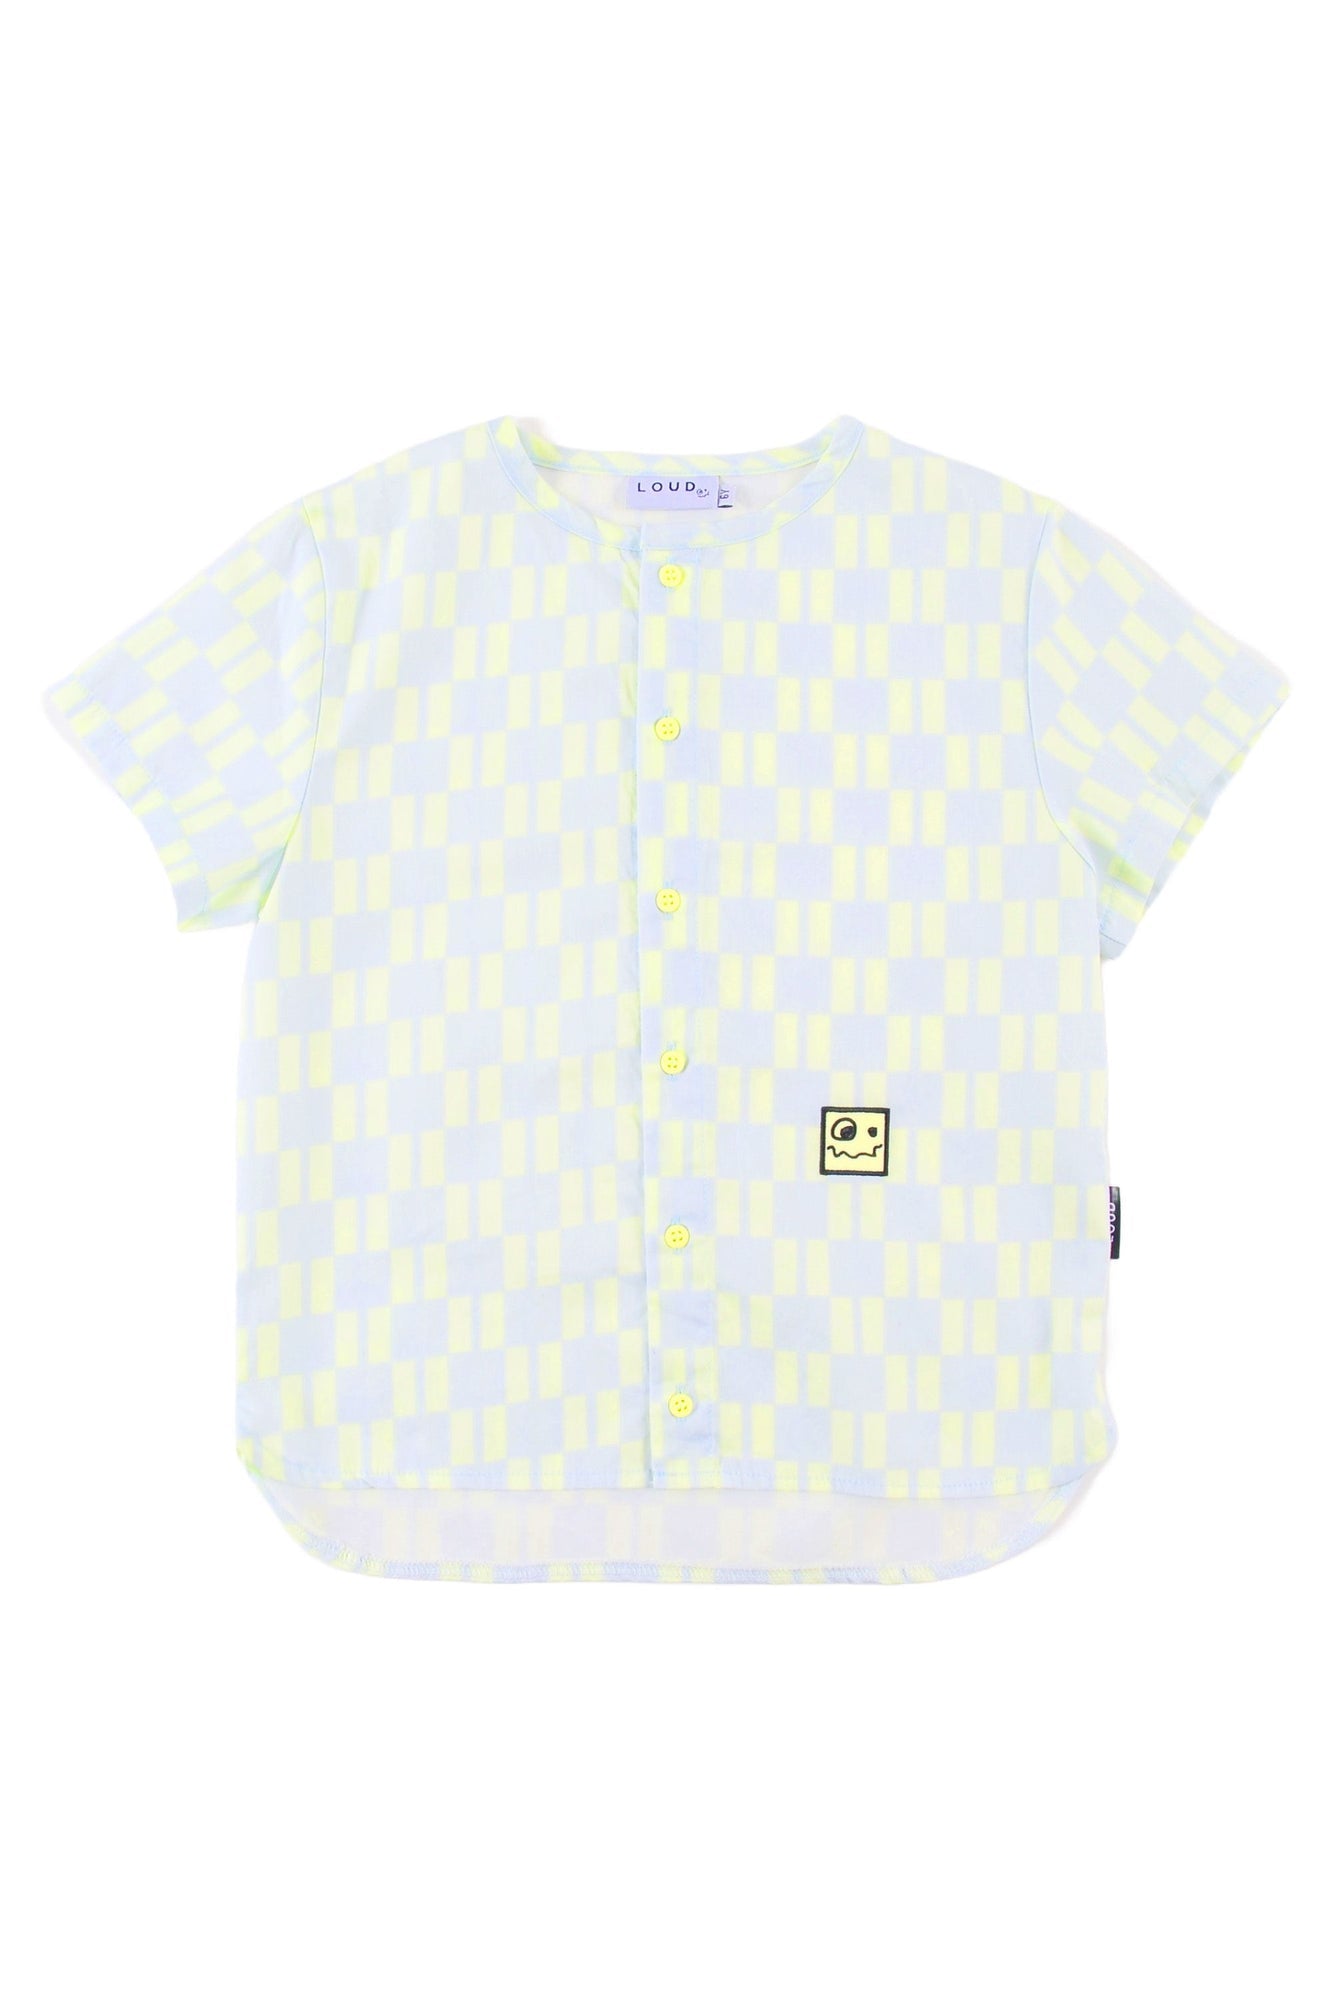 Loud Apparel Blue Checkered Polu Shirt